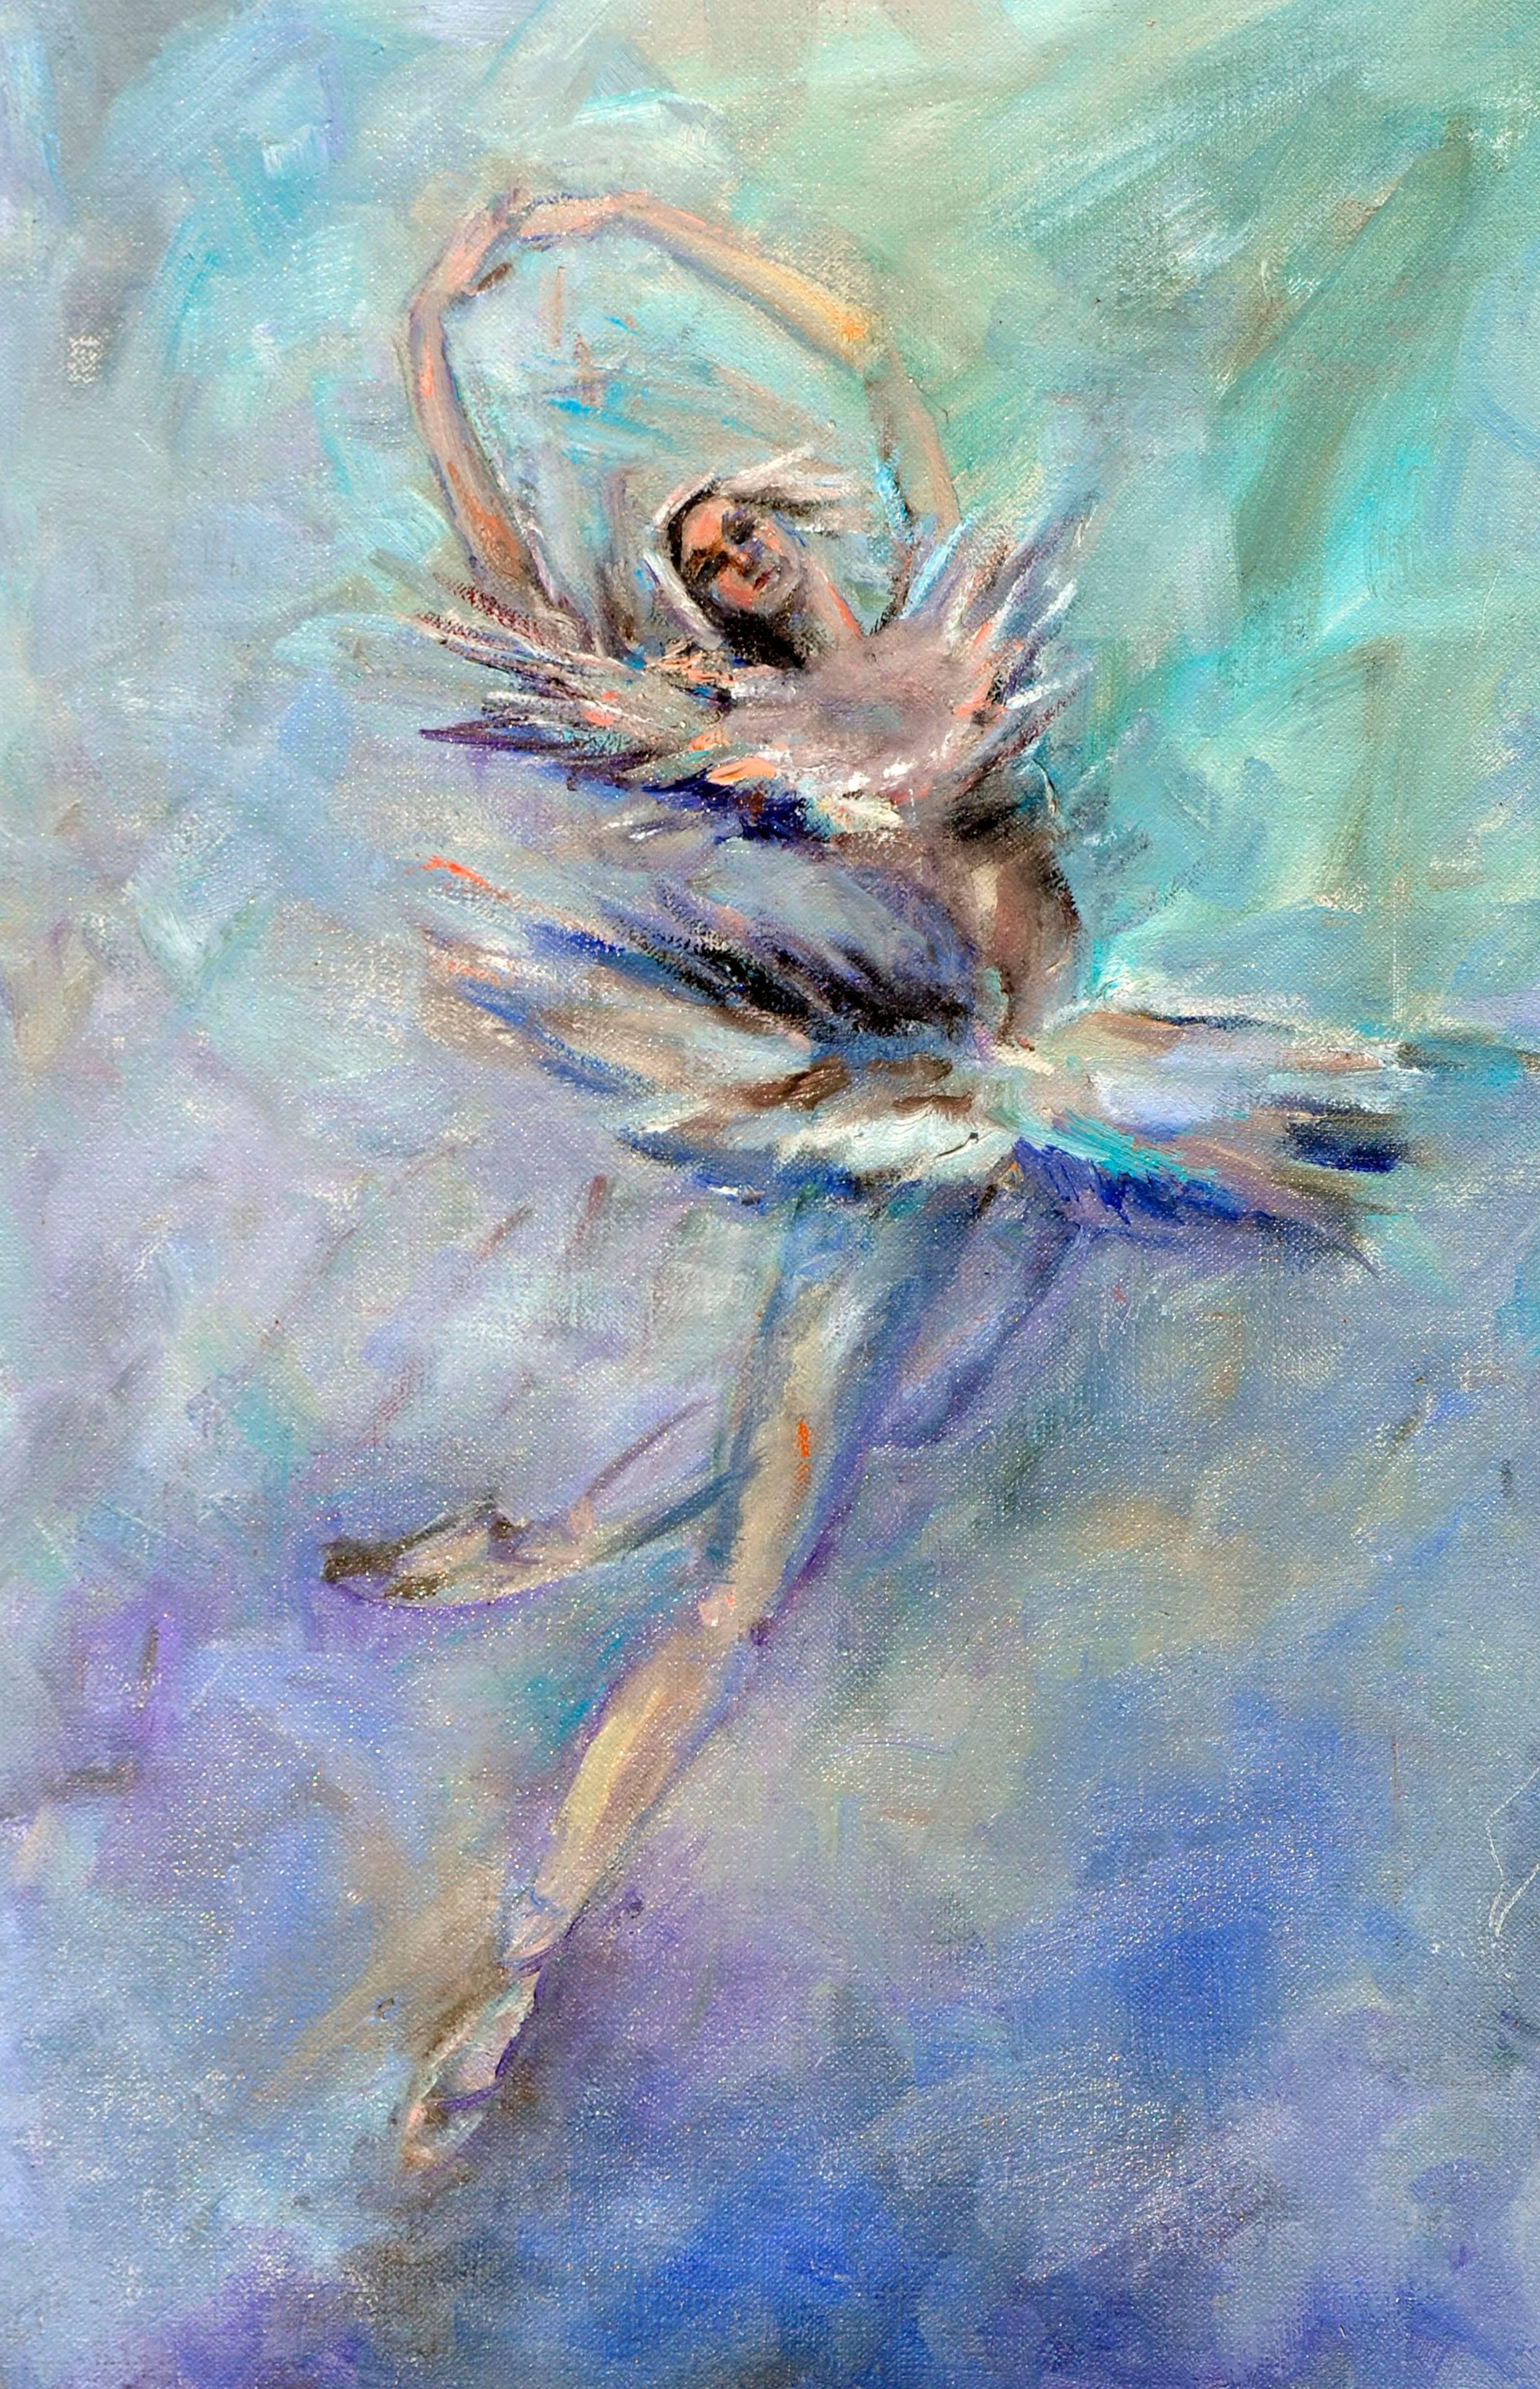 The Ballerina by and as Irina Belotelkin - Painting by Irina Belotelkin Roublon